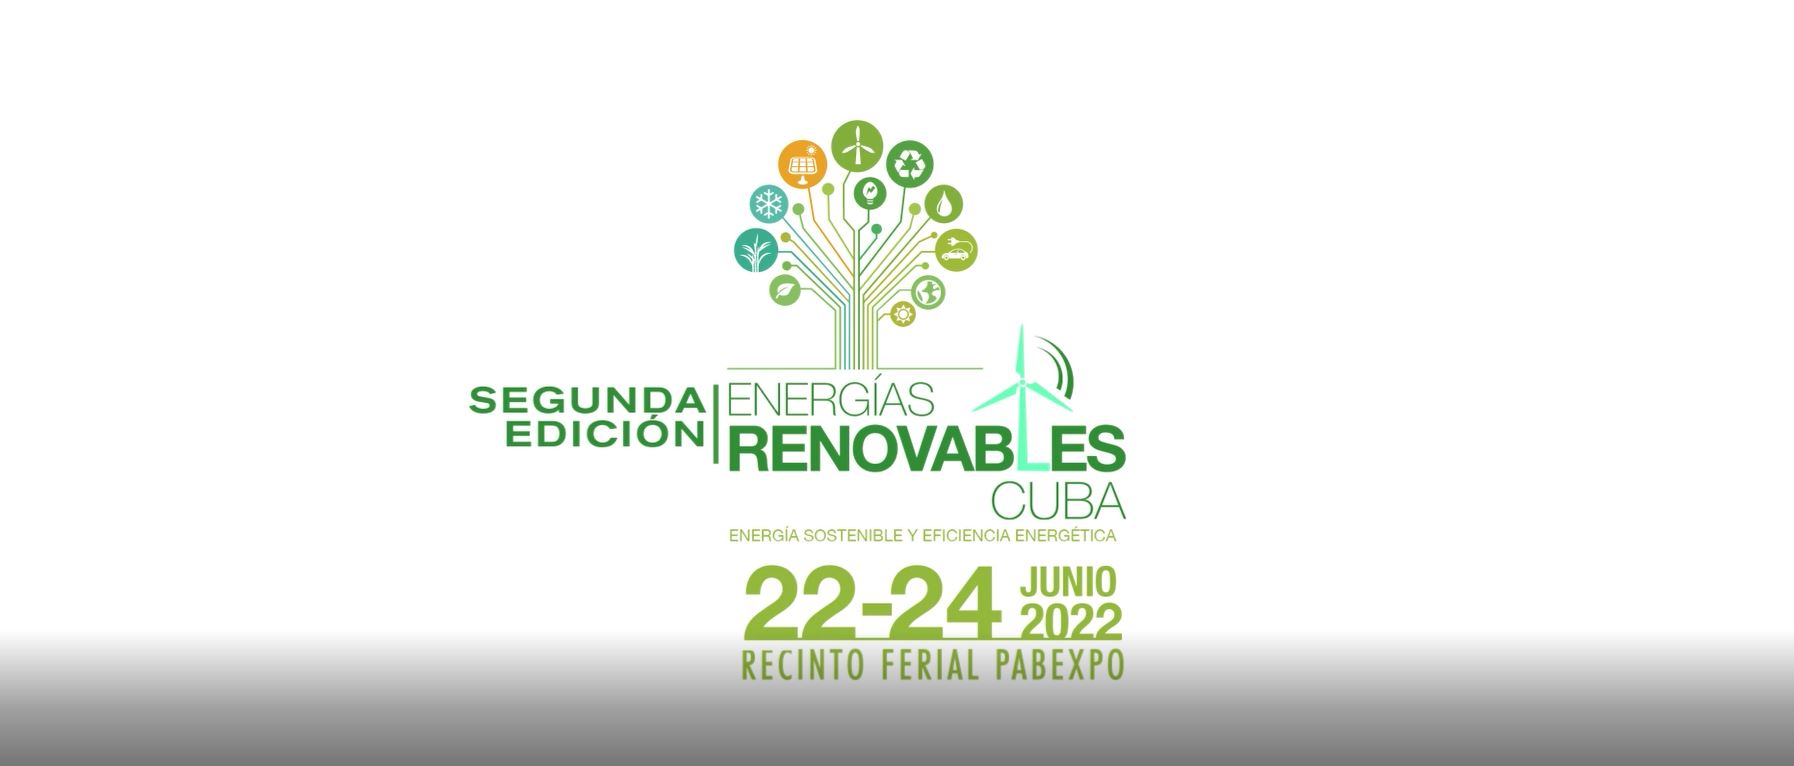 Cuba celebra la II Feria Internacional de Energías Renovables